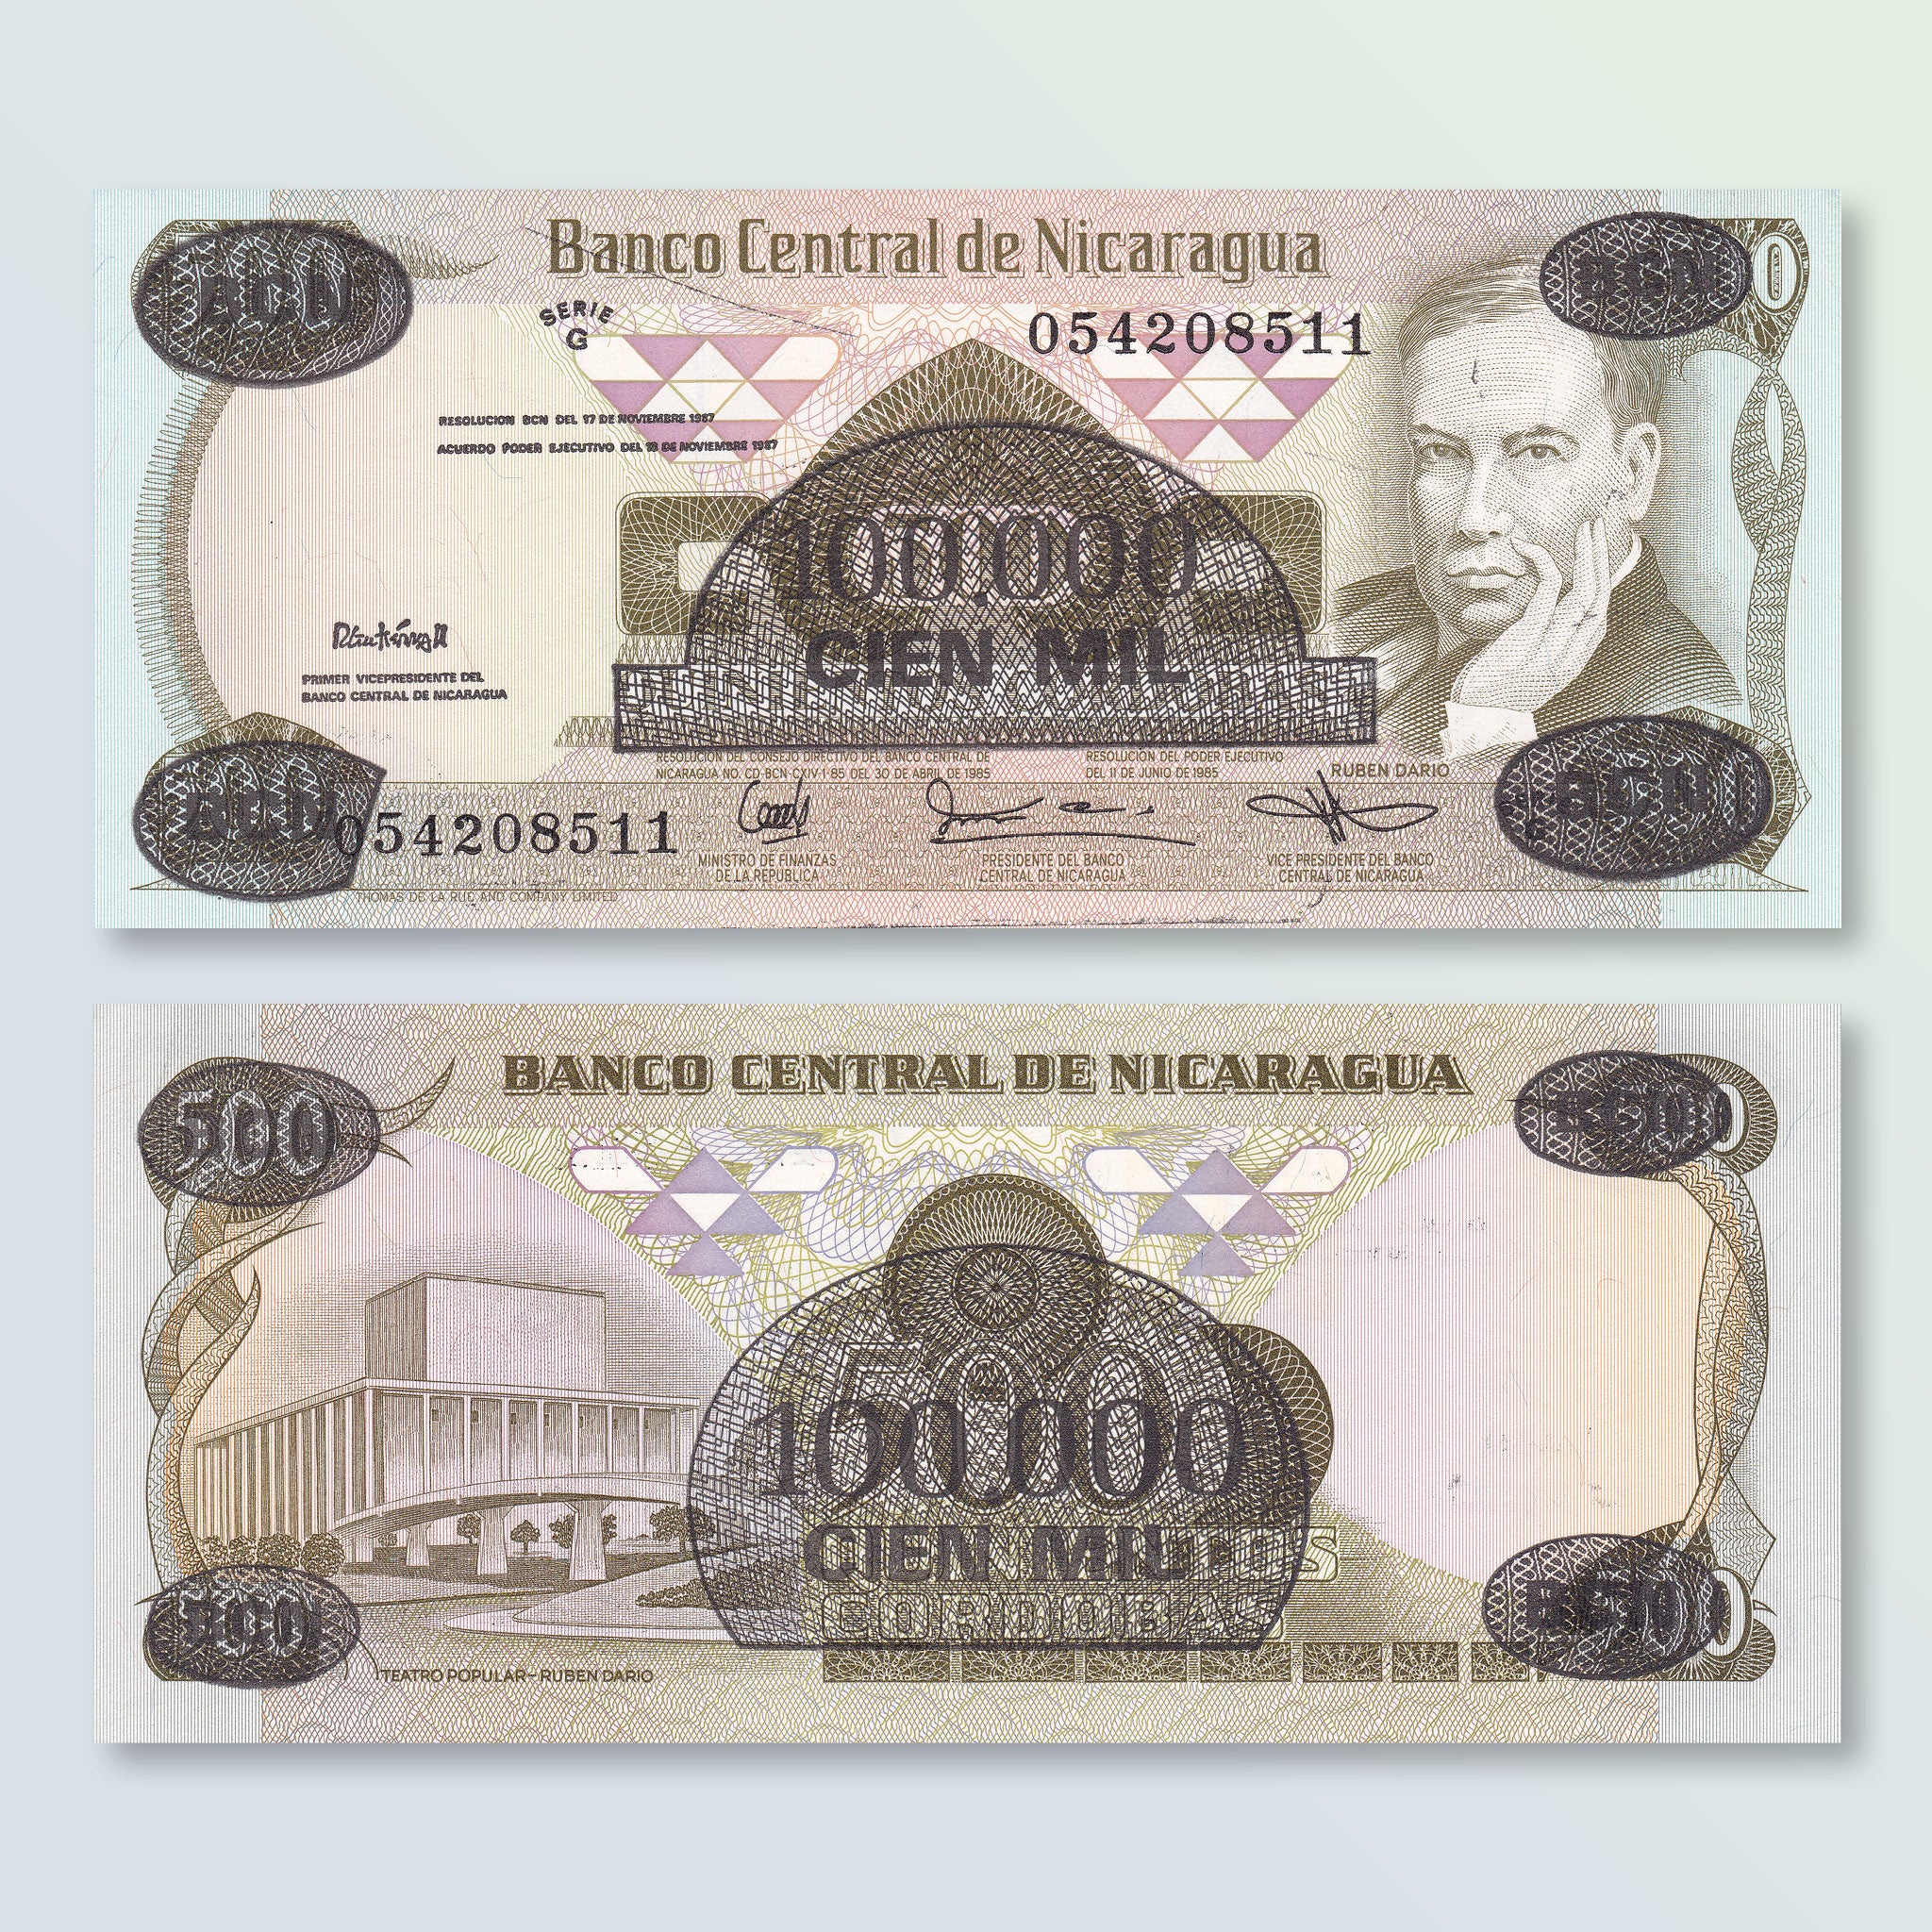 Nicaragua 100000 Córdobas, 1987, B443a, P149, UNC - Robert's World Money - World Banknotes